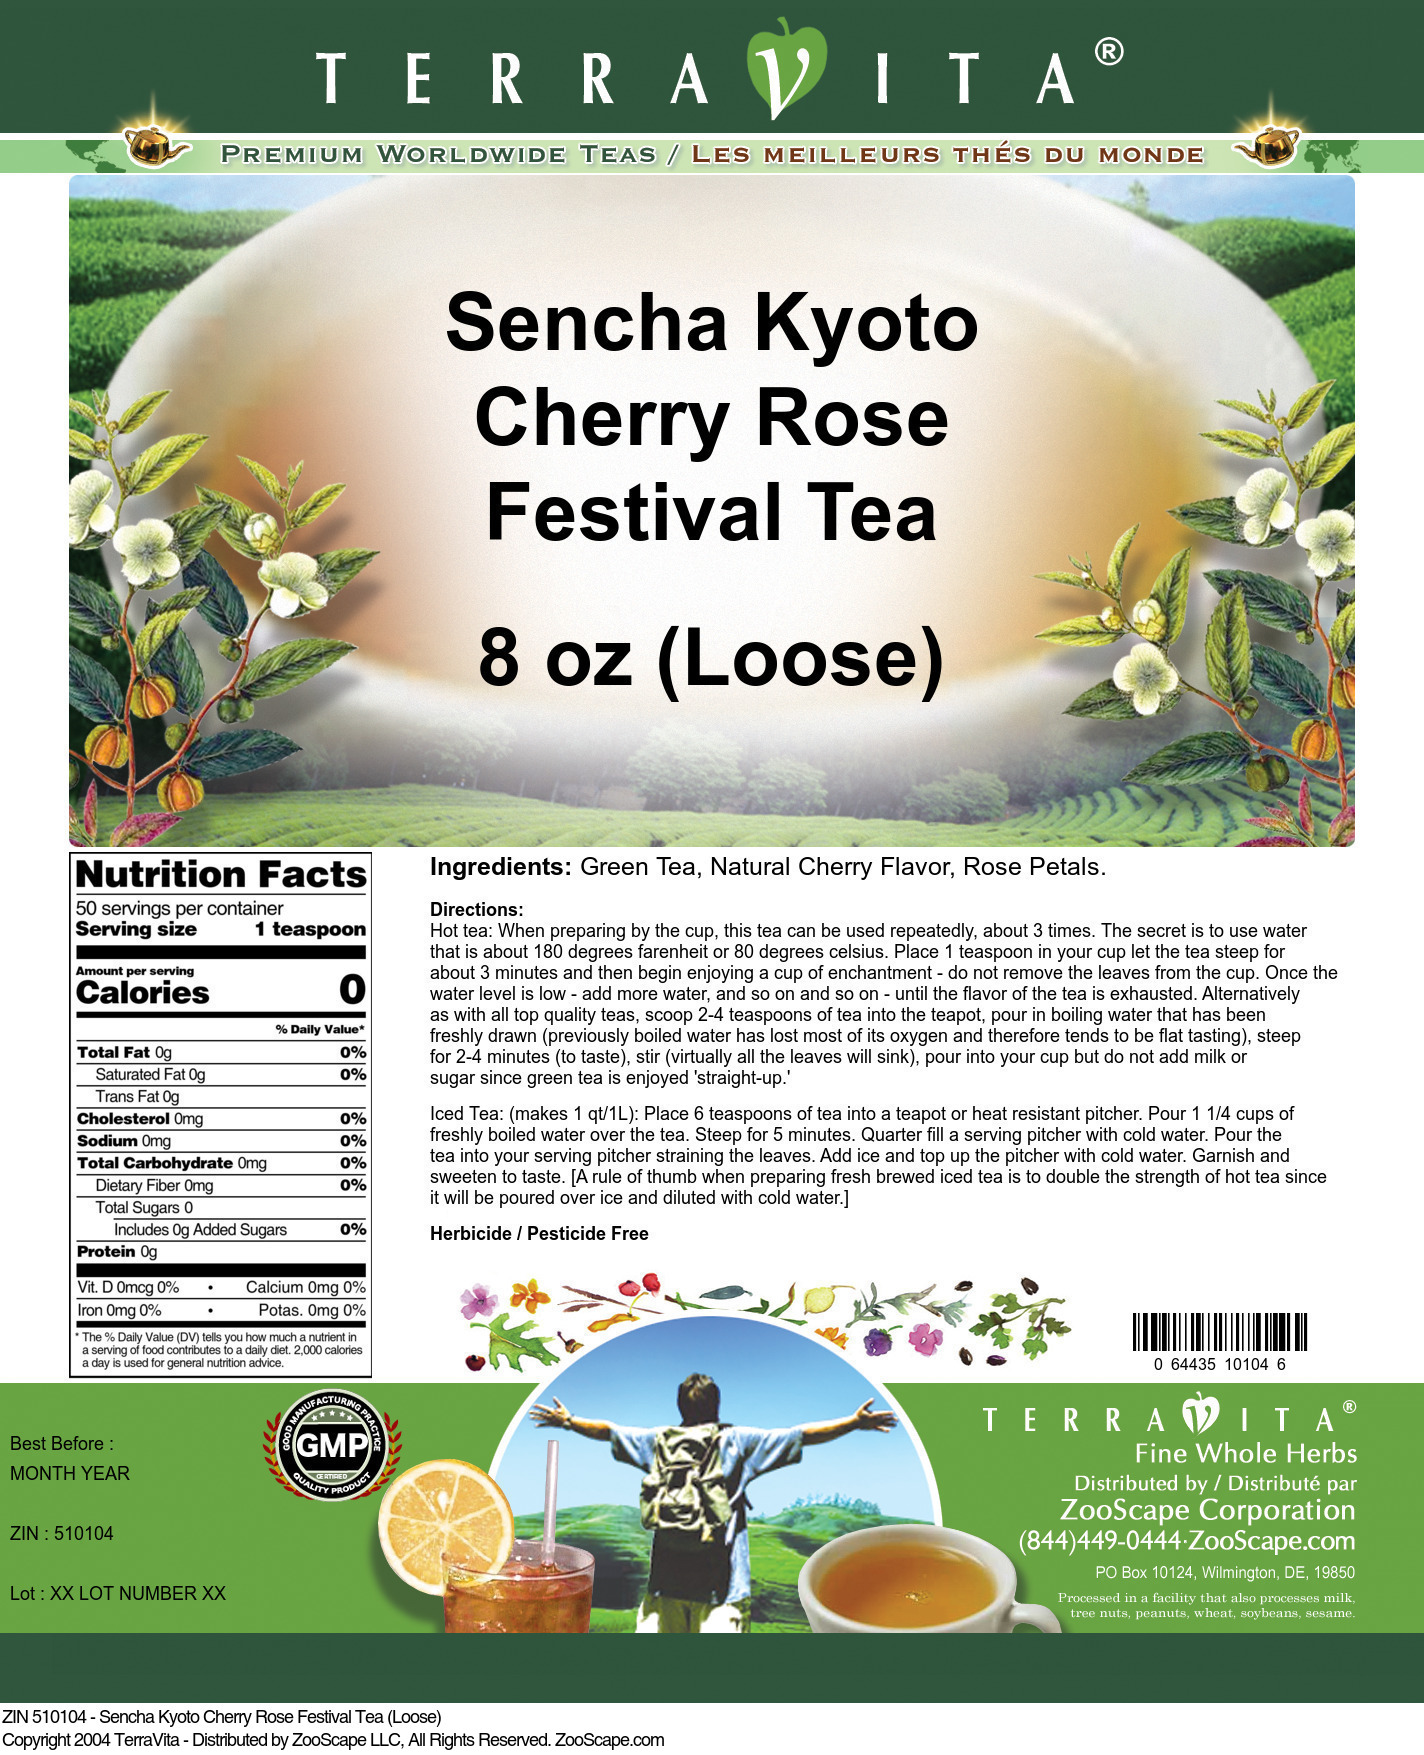 Sencha Kyoto Cherry Rose Festival Tea (Loose) - Label